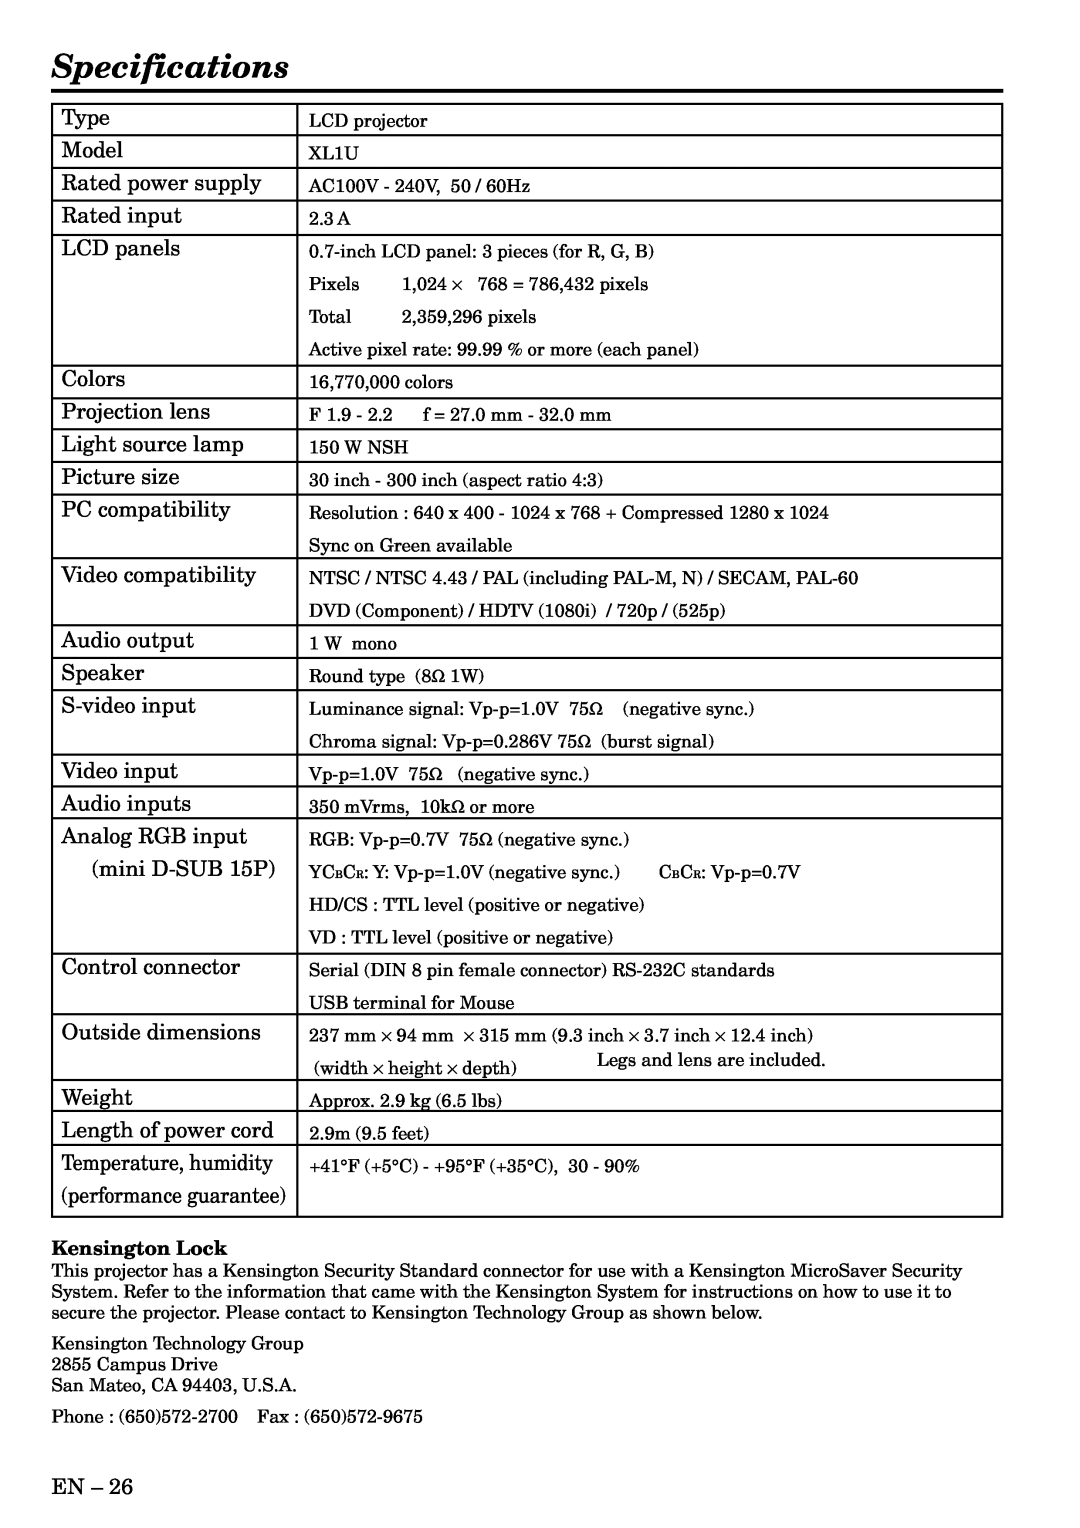 Mitsubishi Electronics XL1U user manual Specifications, Kensington Lock 